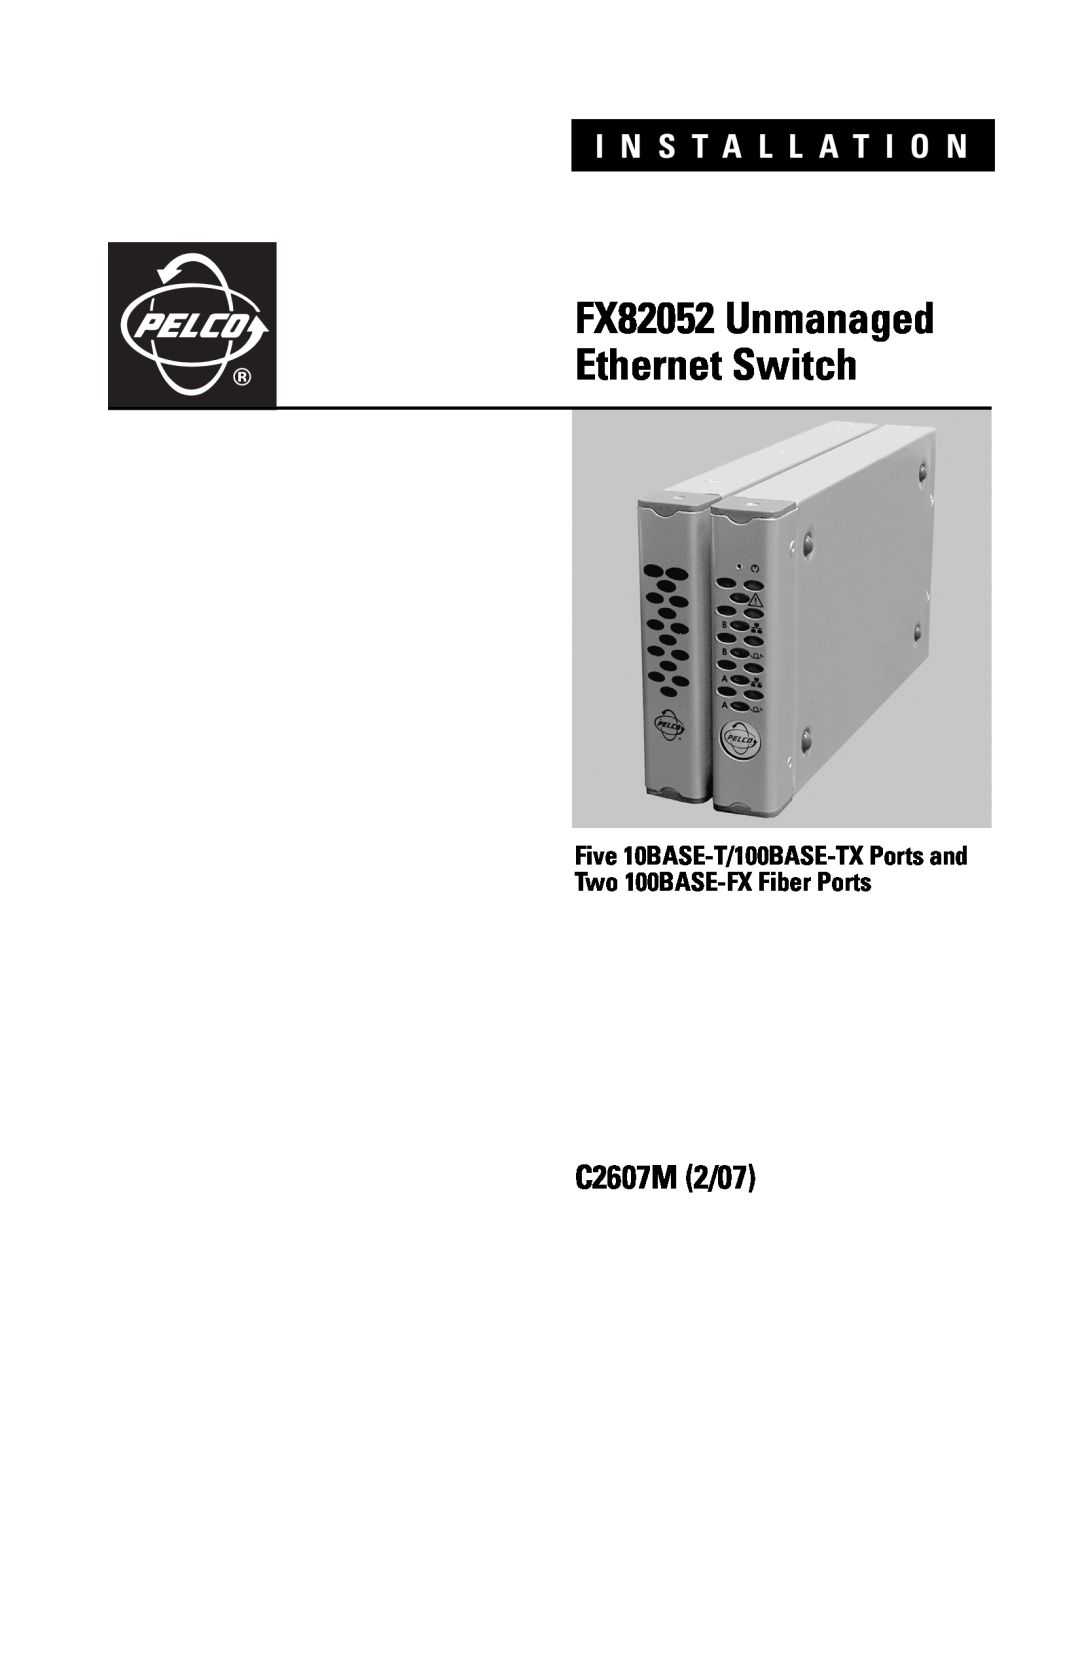 Pelco 100BASE-TX, 100BASE-FX manual C2607M 2/07, Ethernet Switch, FX82052 Unmanaged, I N S T A L L A T I O N 